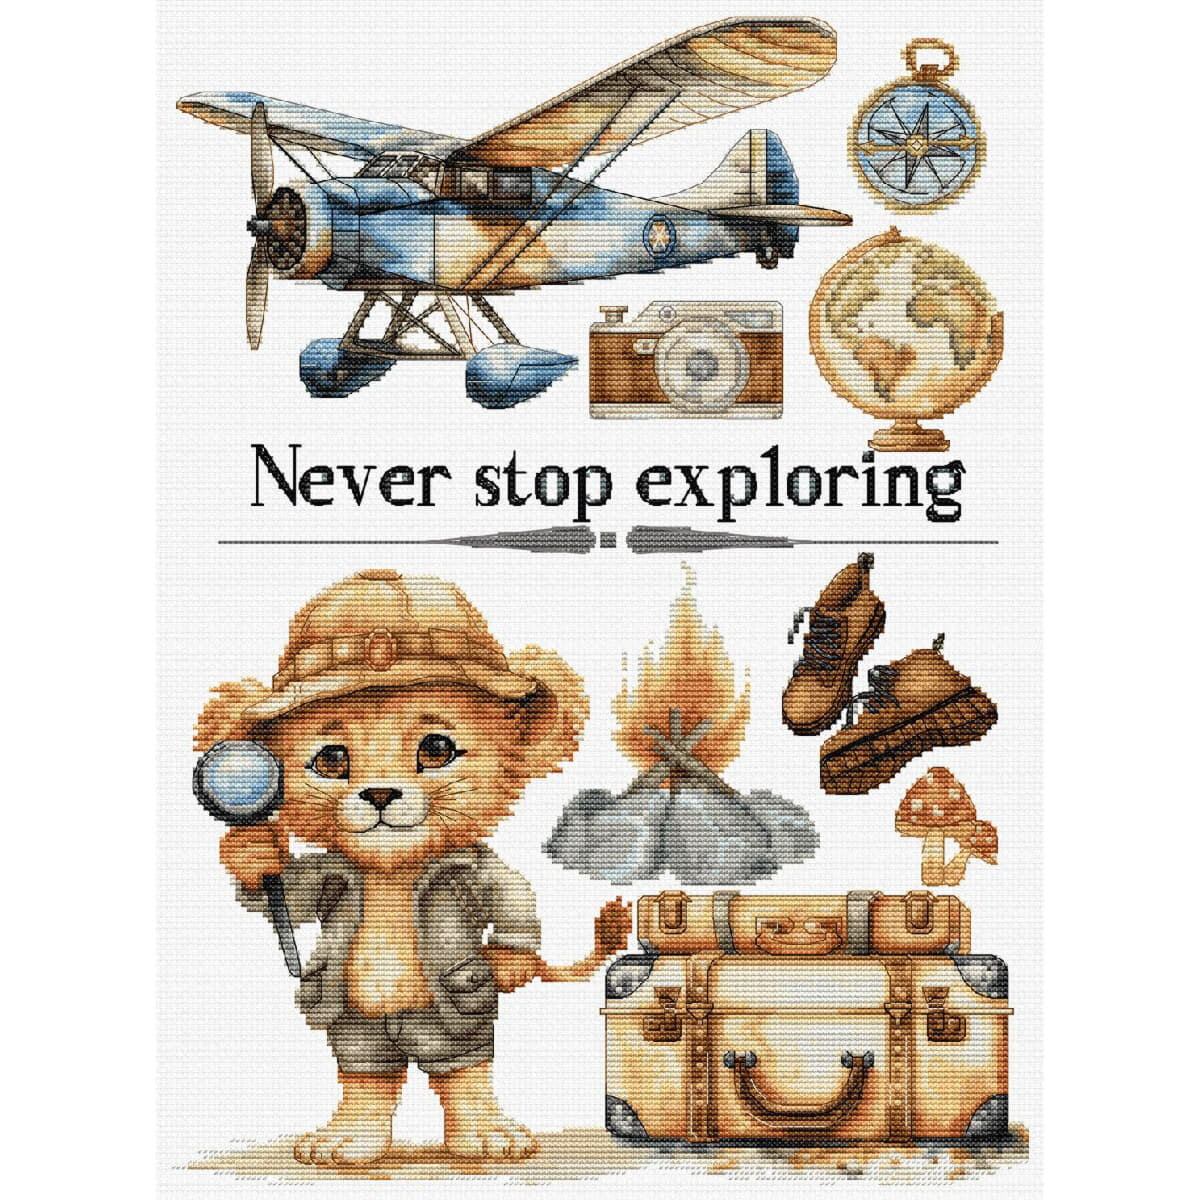 A whimsical illustration shows a bear cub on a journey,...